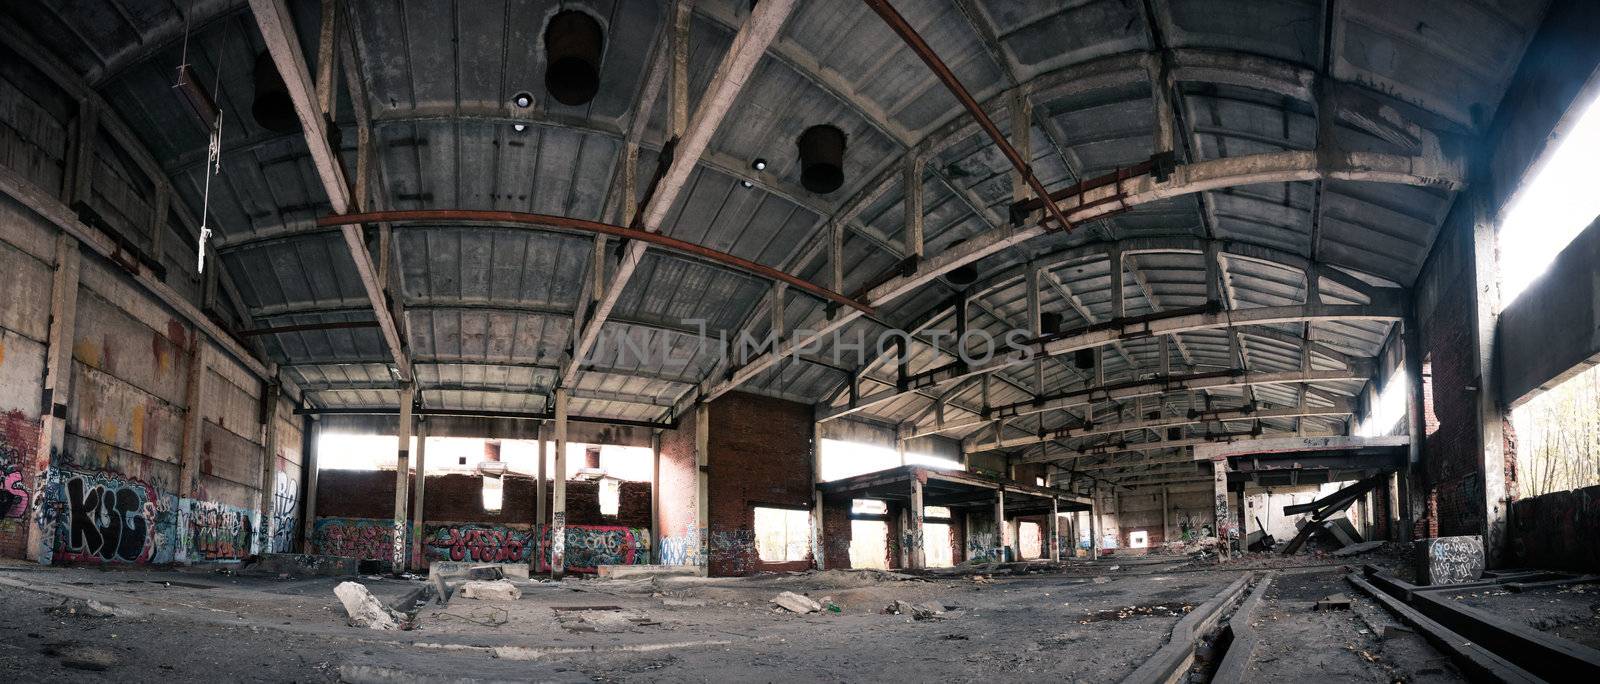 Abandoned plant interior by dmitryelagin